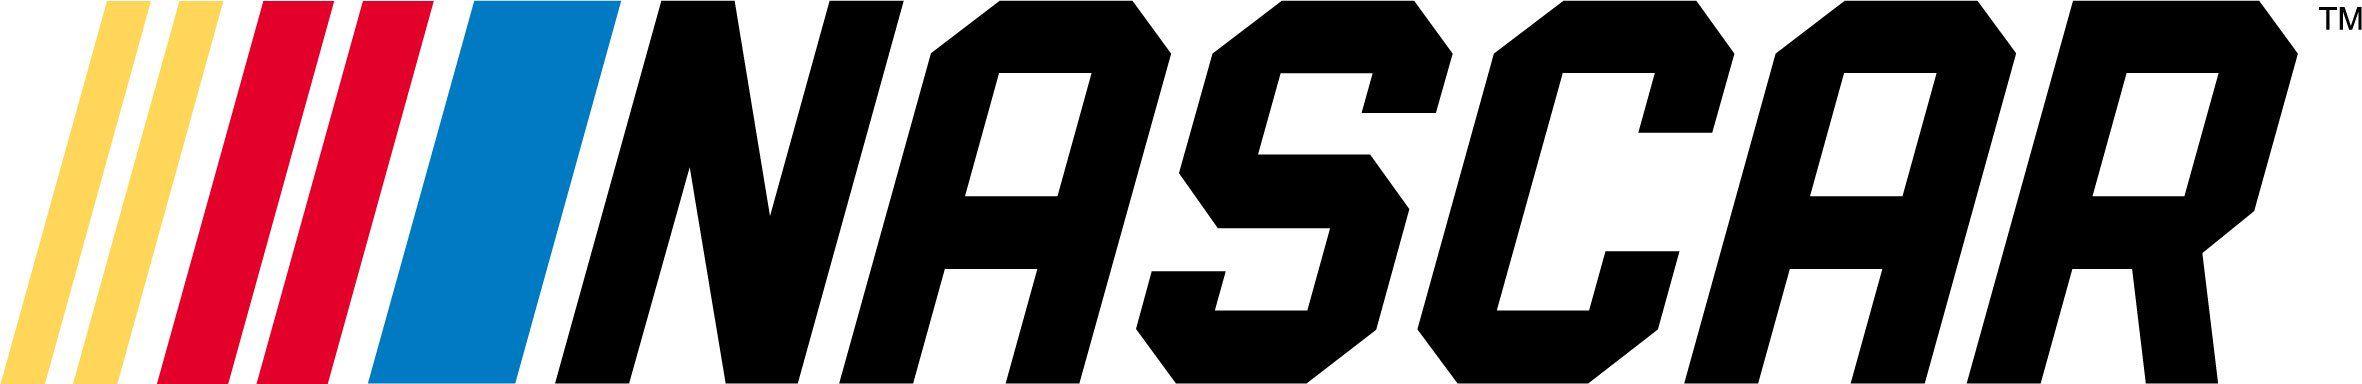 NASCAR Driver Logo - New NASCAR Logo and Monster Energy NASCAR Cup Series Logo